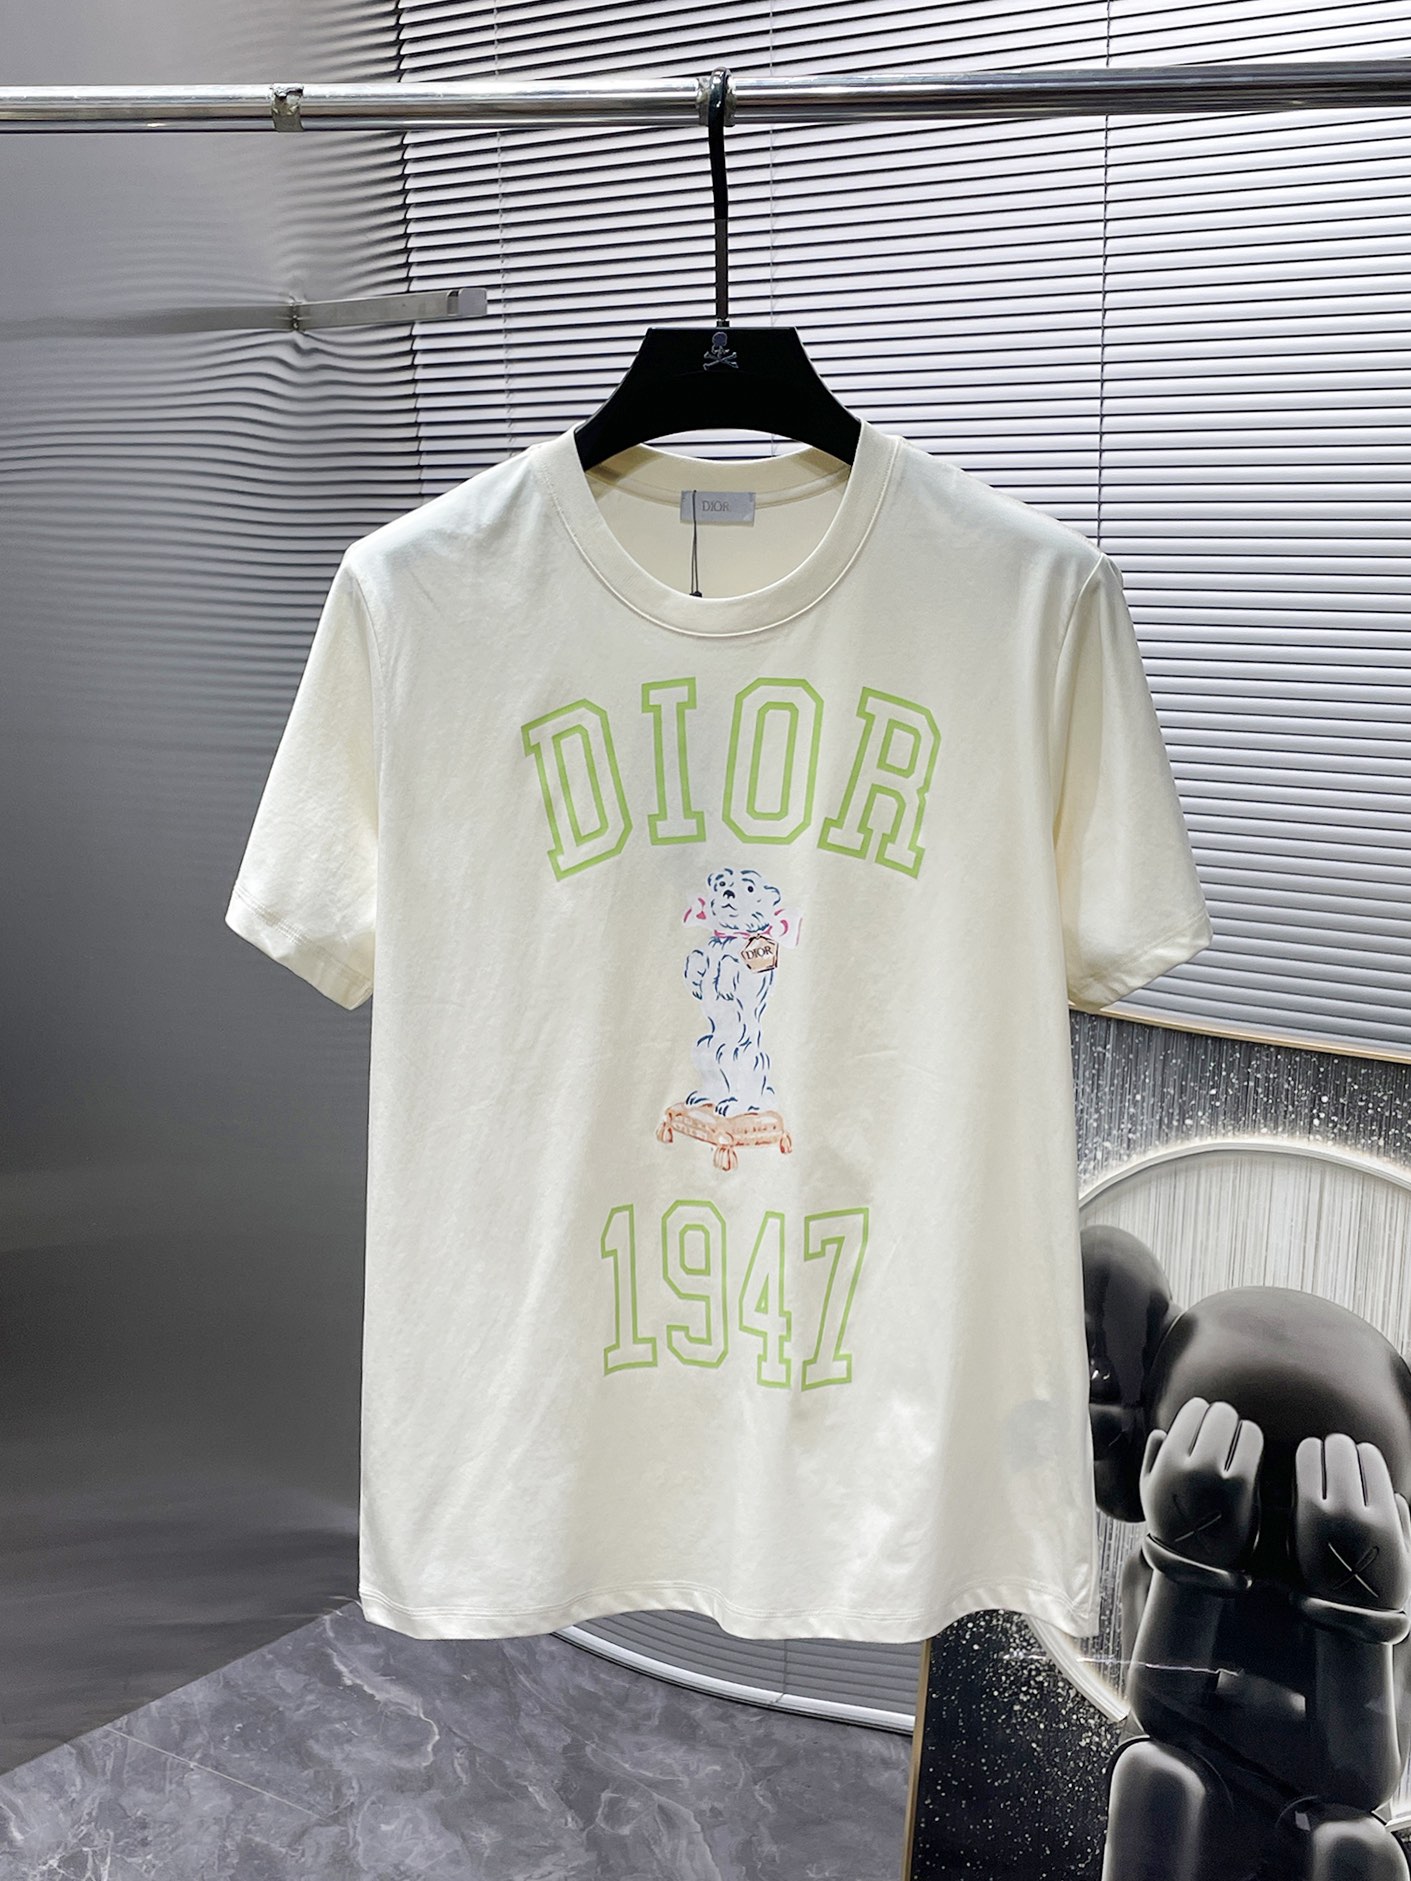 Dior Flawless
 Clothing T-Shirt cheap online Best Designer
 Short Sleeve